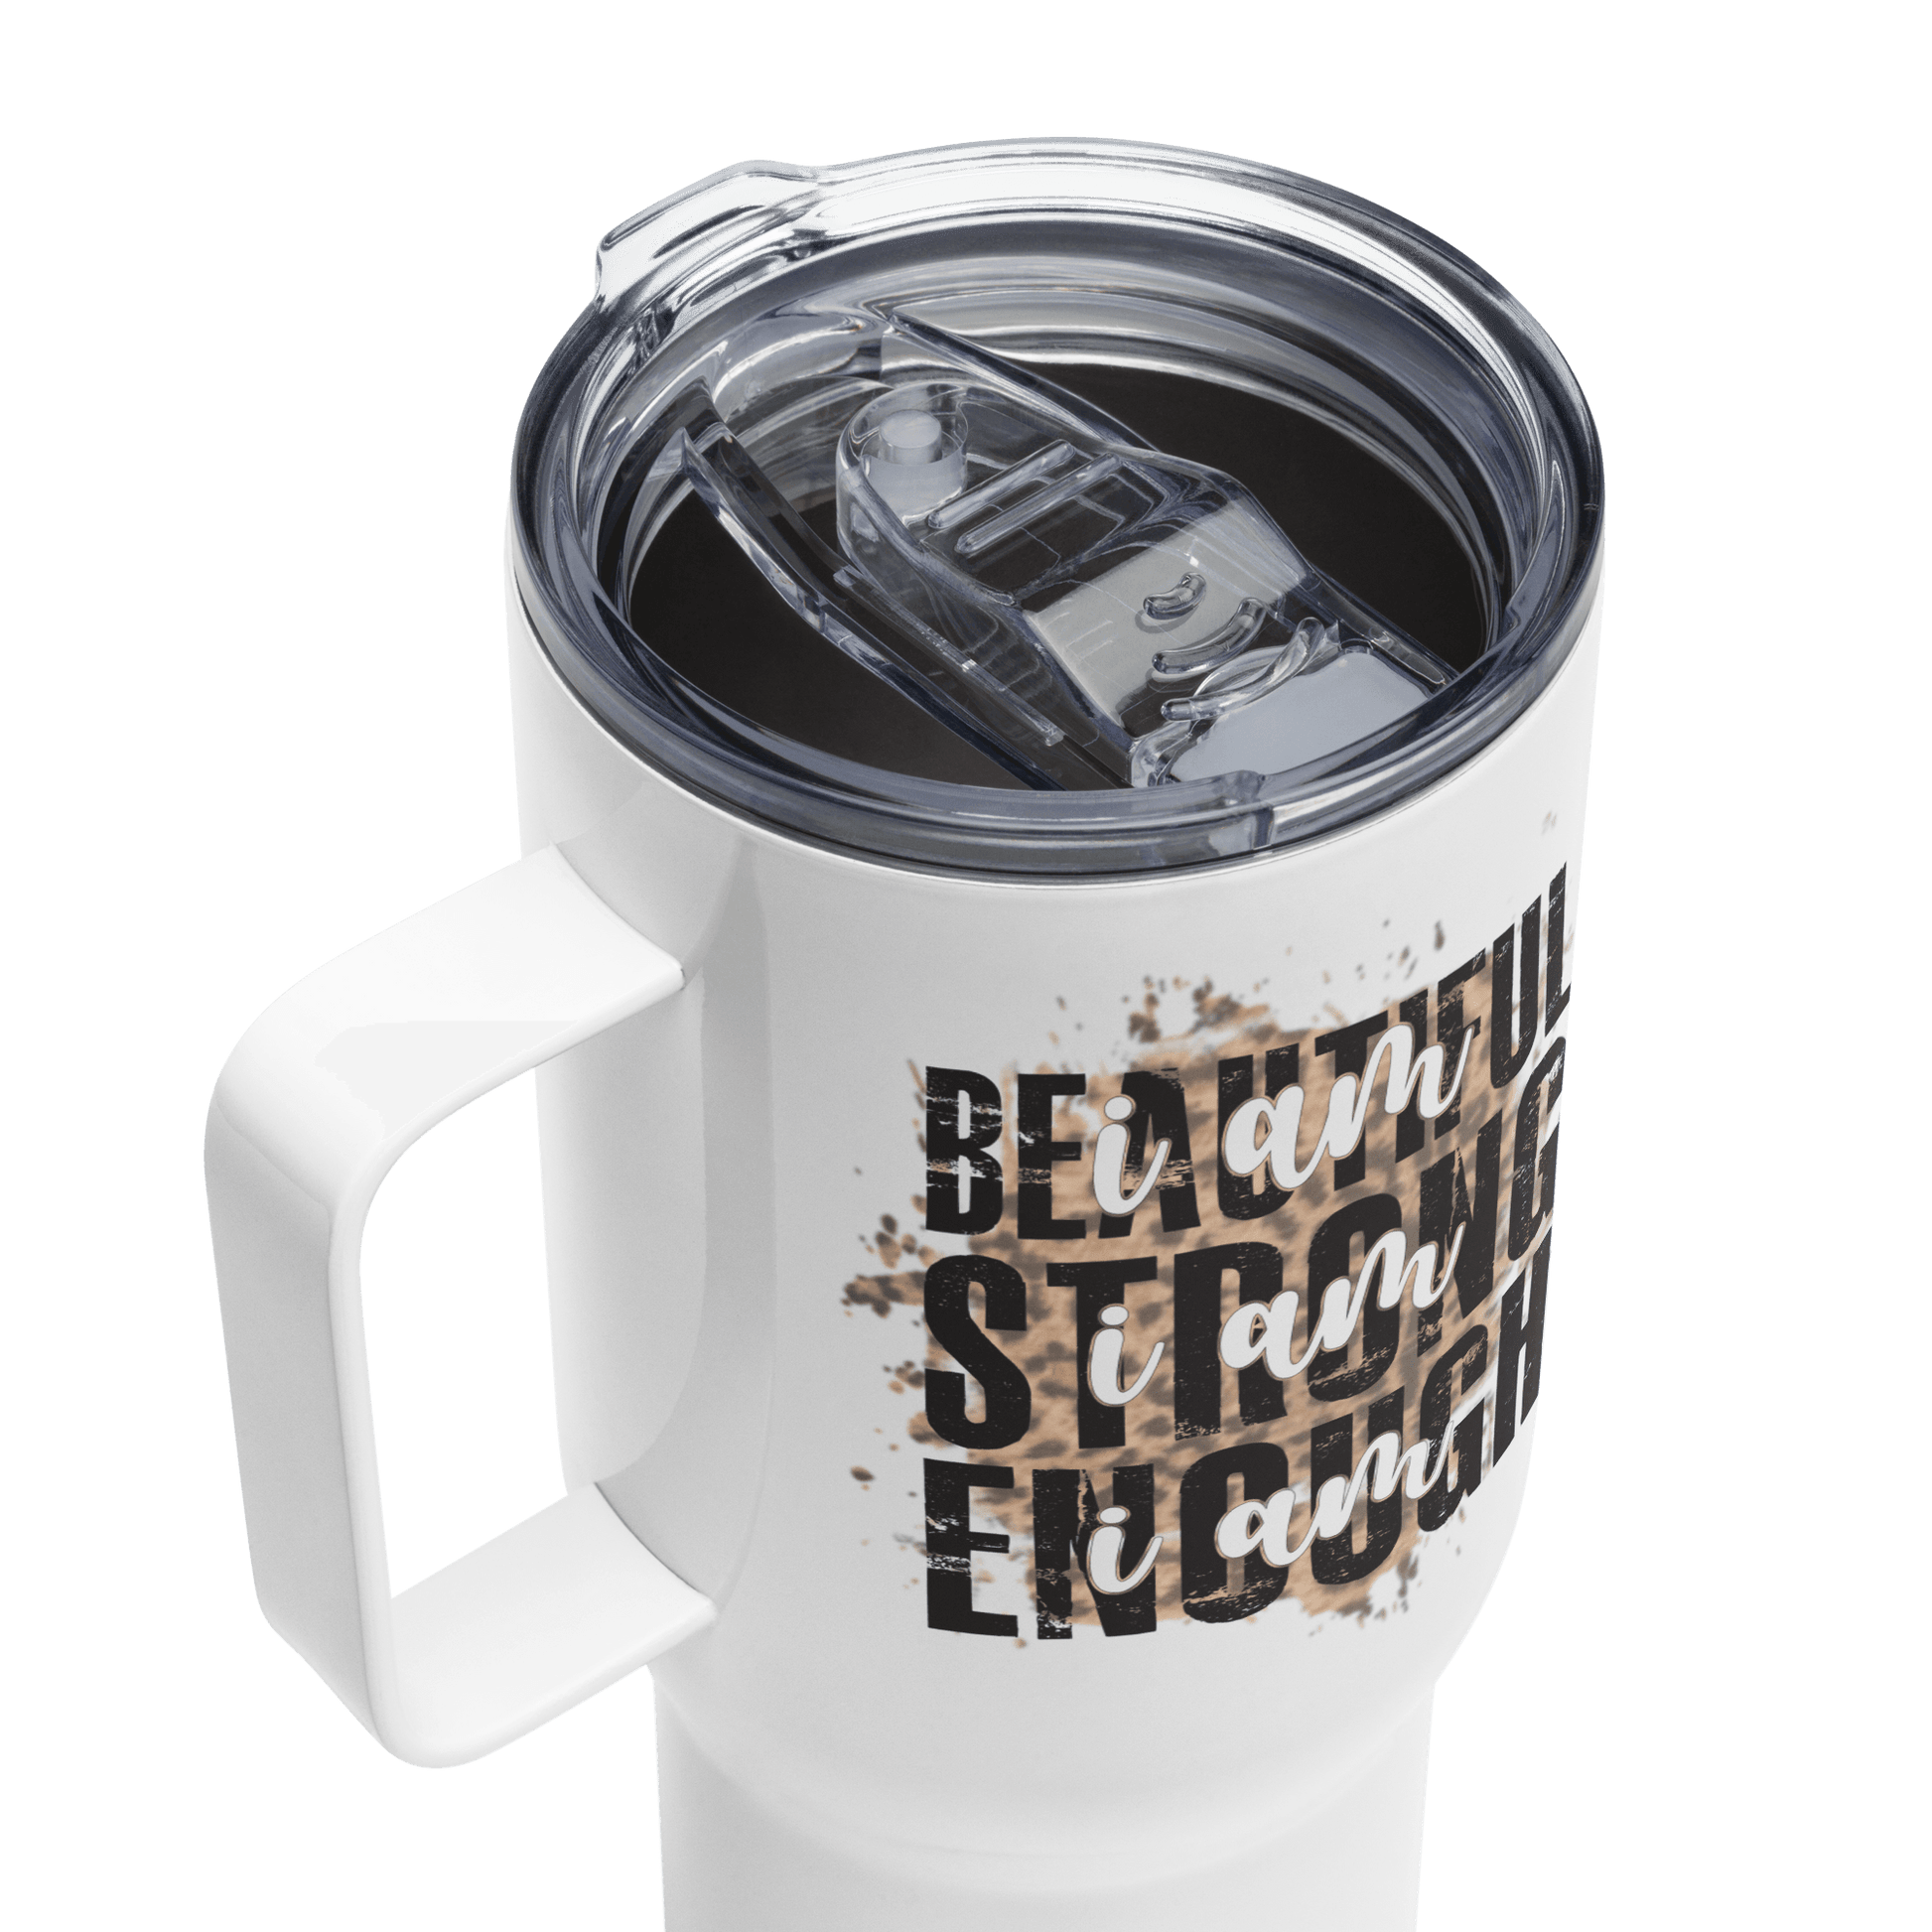 Beautiful Strong Enough Travel mug with a handle - L & M Kee, LLC